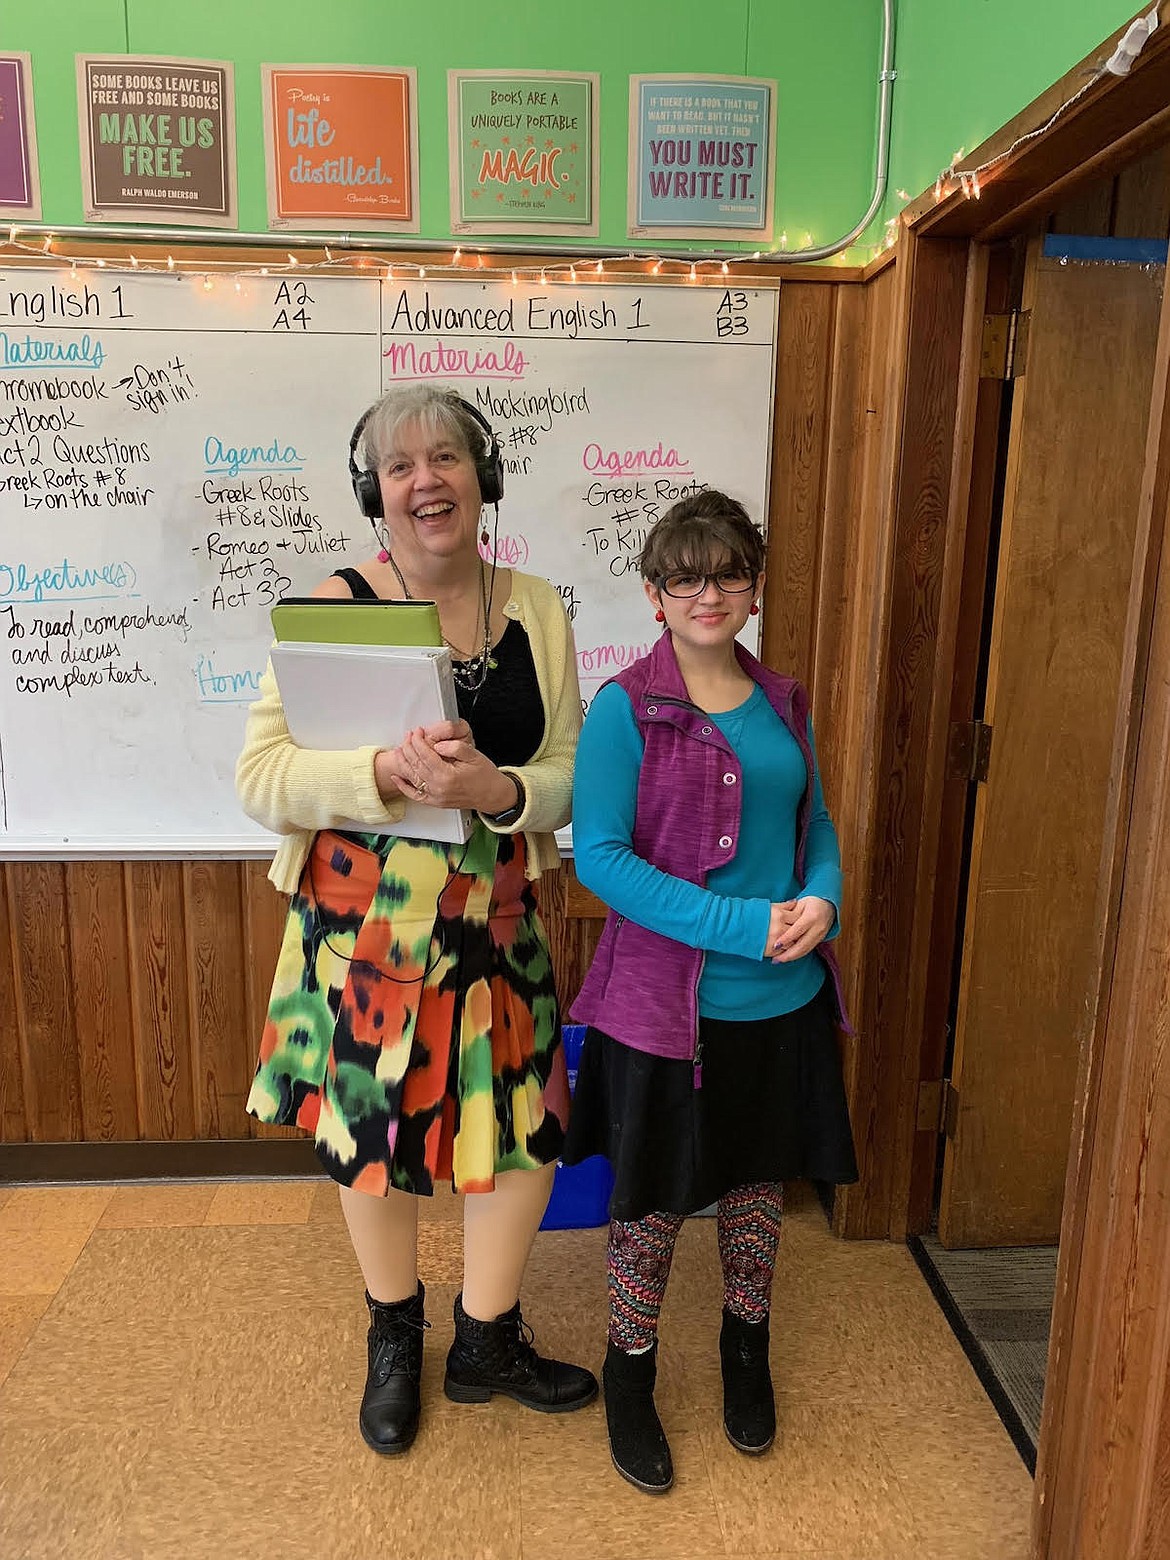 Keilynn Weilacher and Mrs. Barrick also enjoyed spirit week at Libby Public Schools. (Photo courtesy Libby Public Schools)